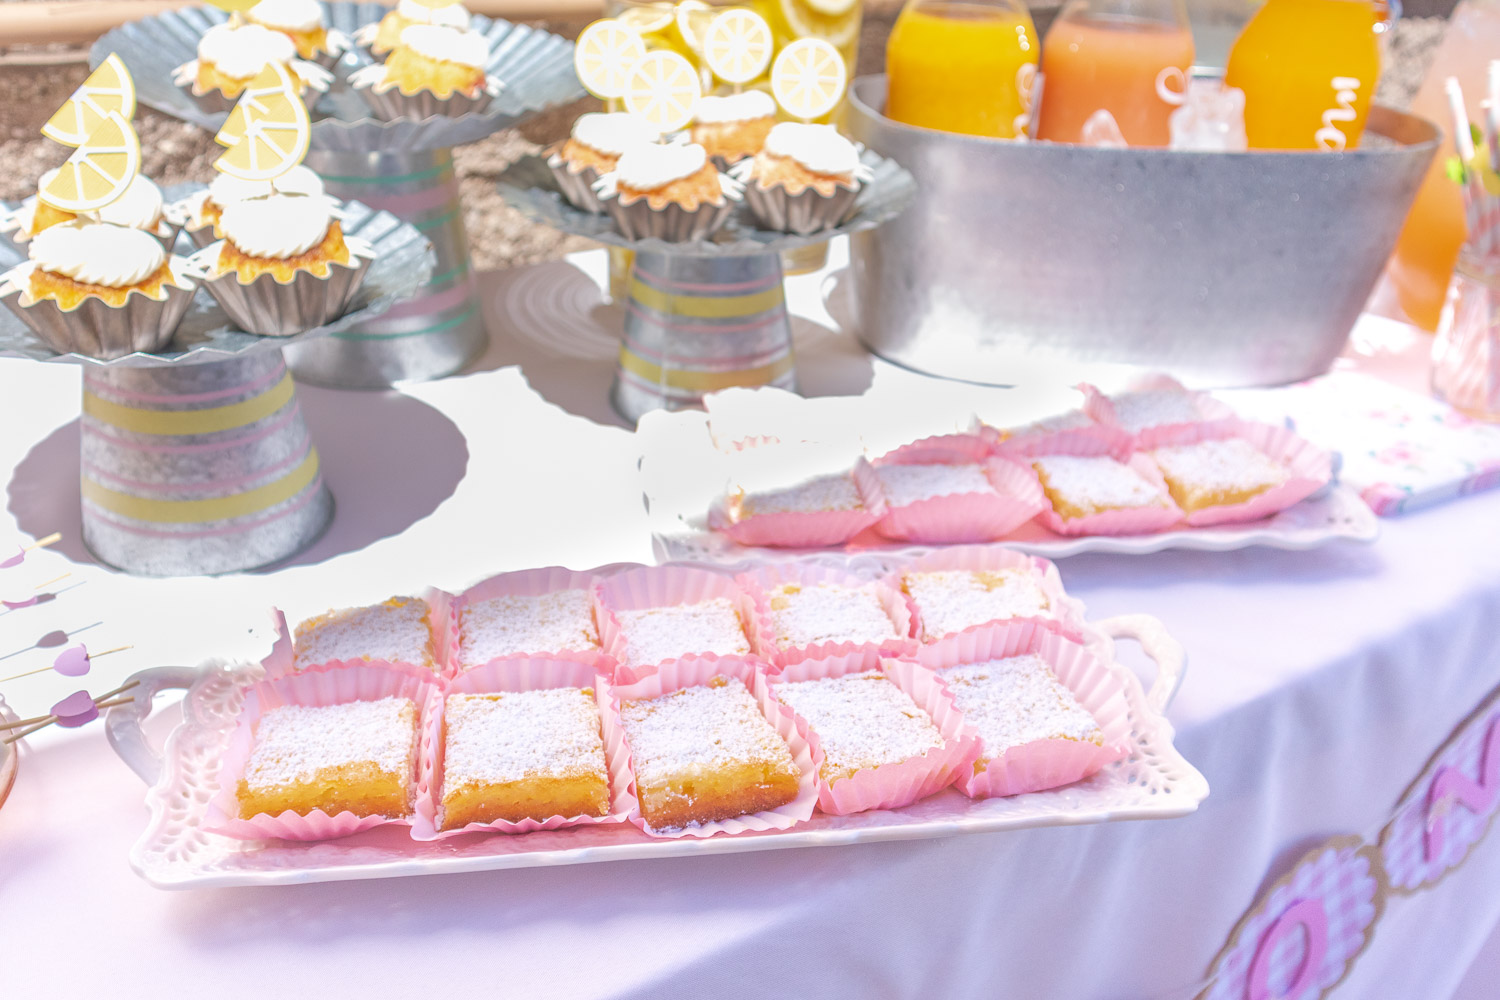 Lemon bars in pink paper wrappers on porcelain tea serving trays. 